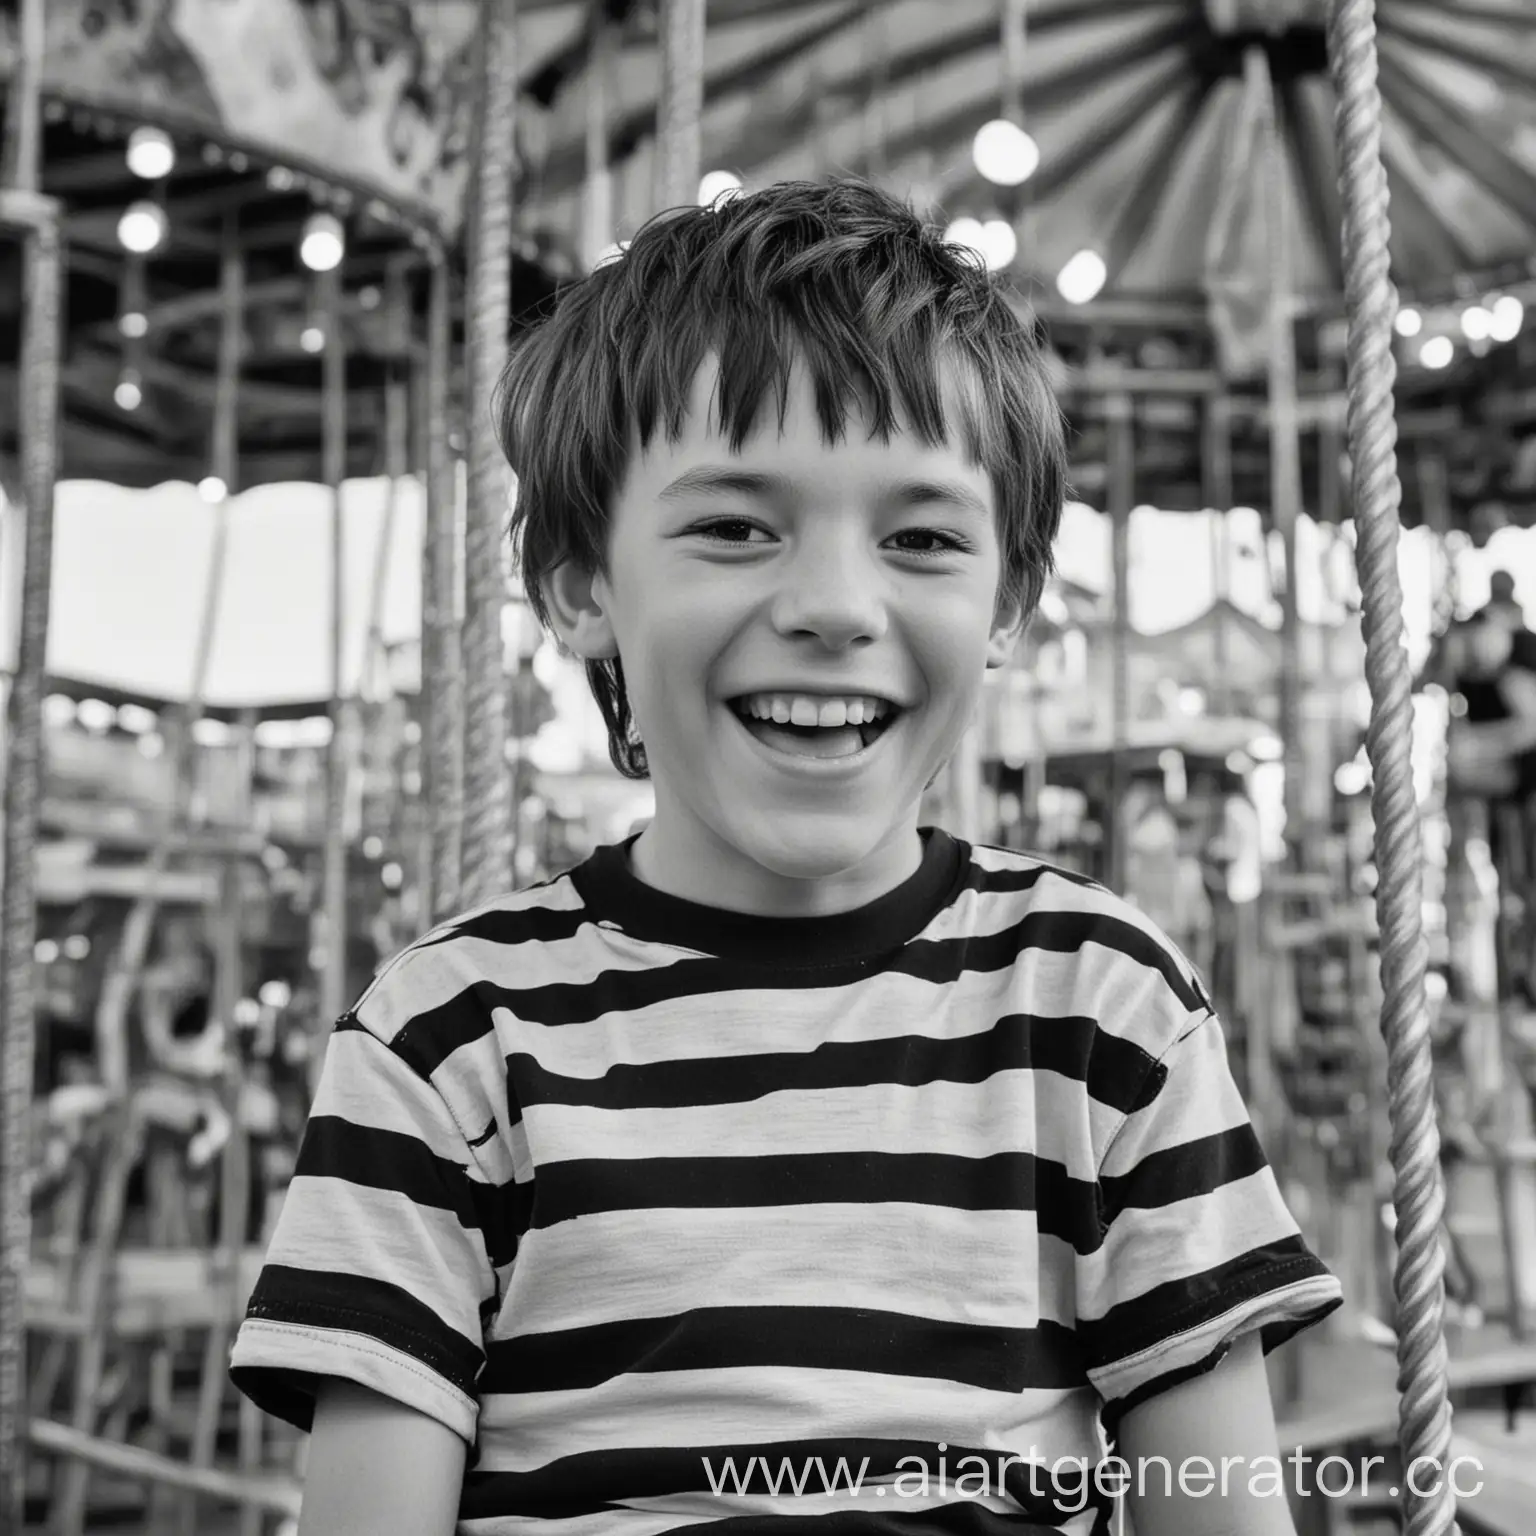 Joyful-10YearOld-Boy-Riding-High-Carousels-at-Amusement-Park